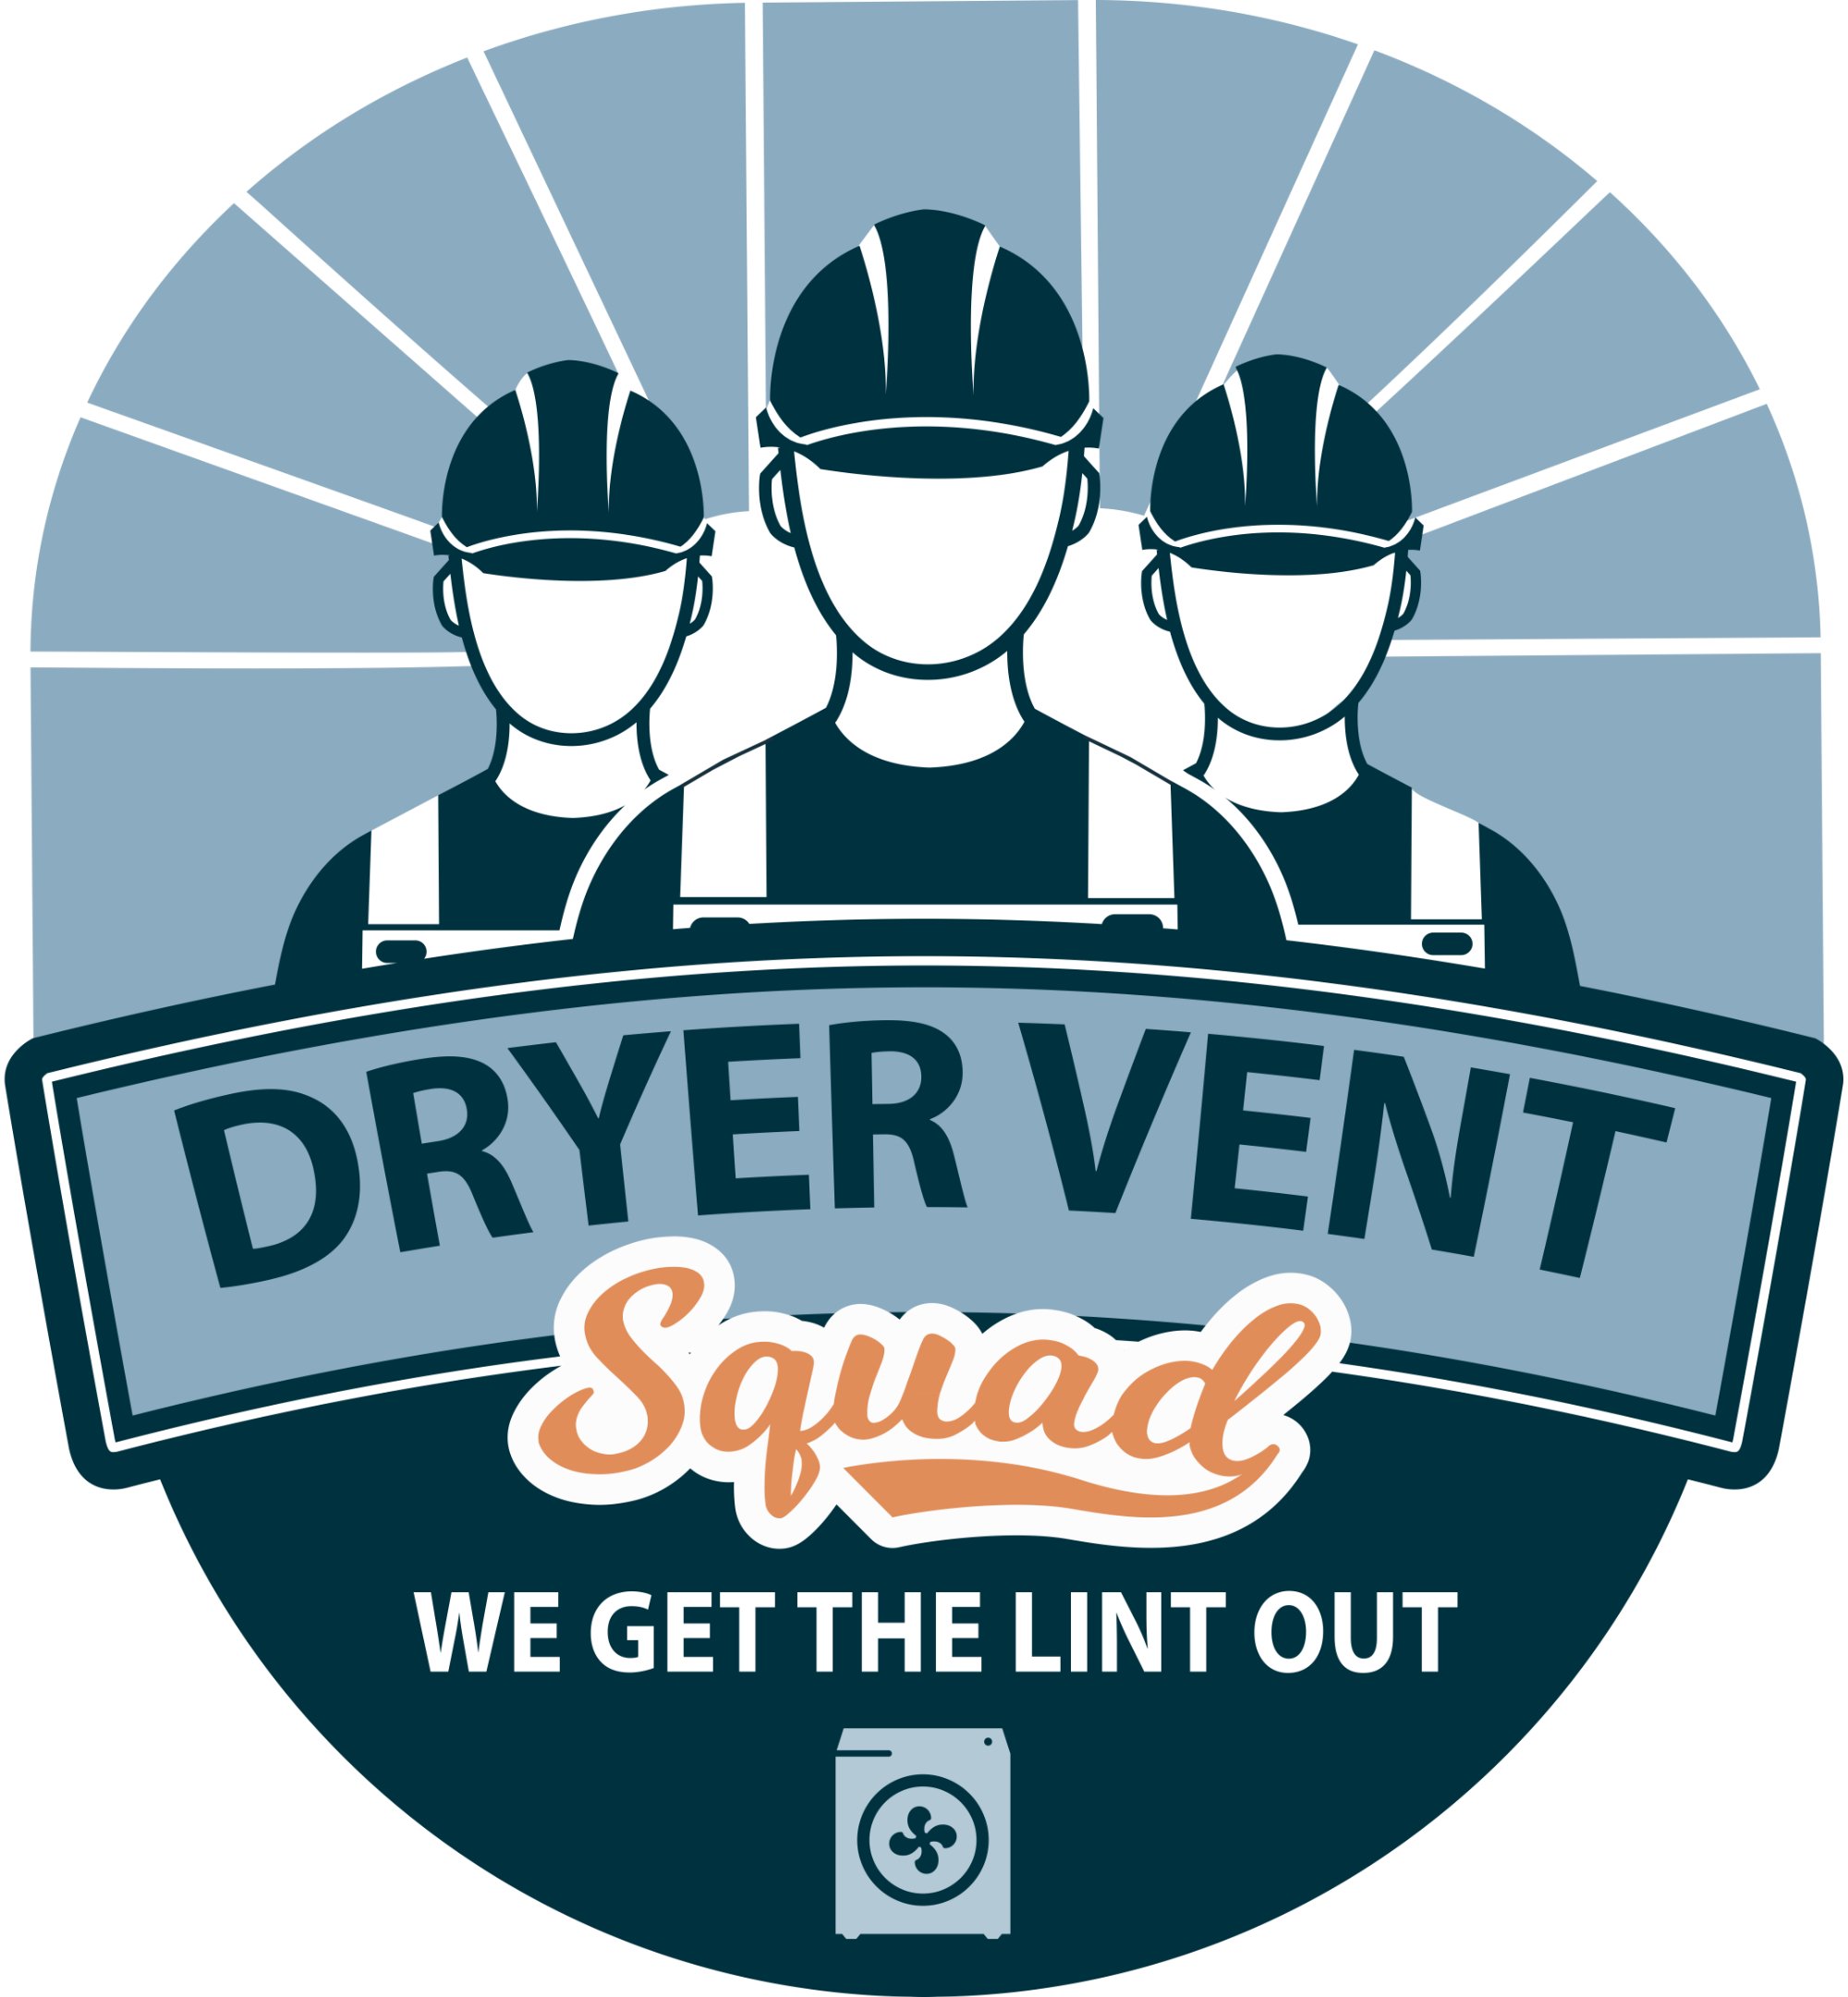 Dryer Vent Squad Logo